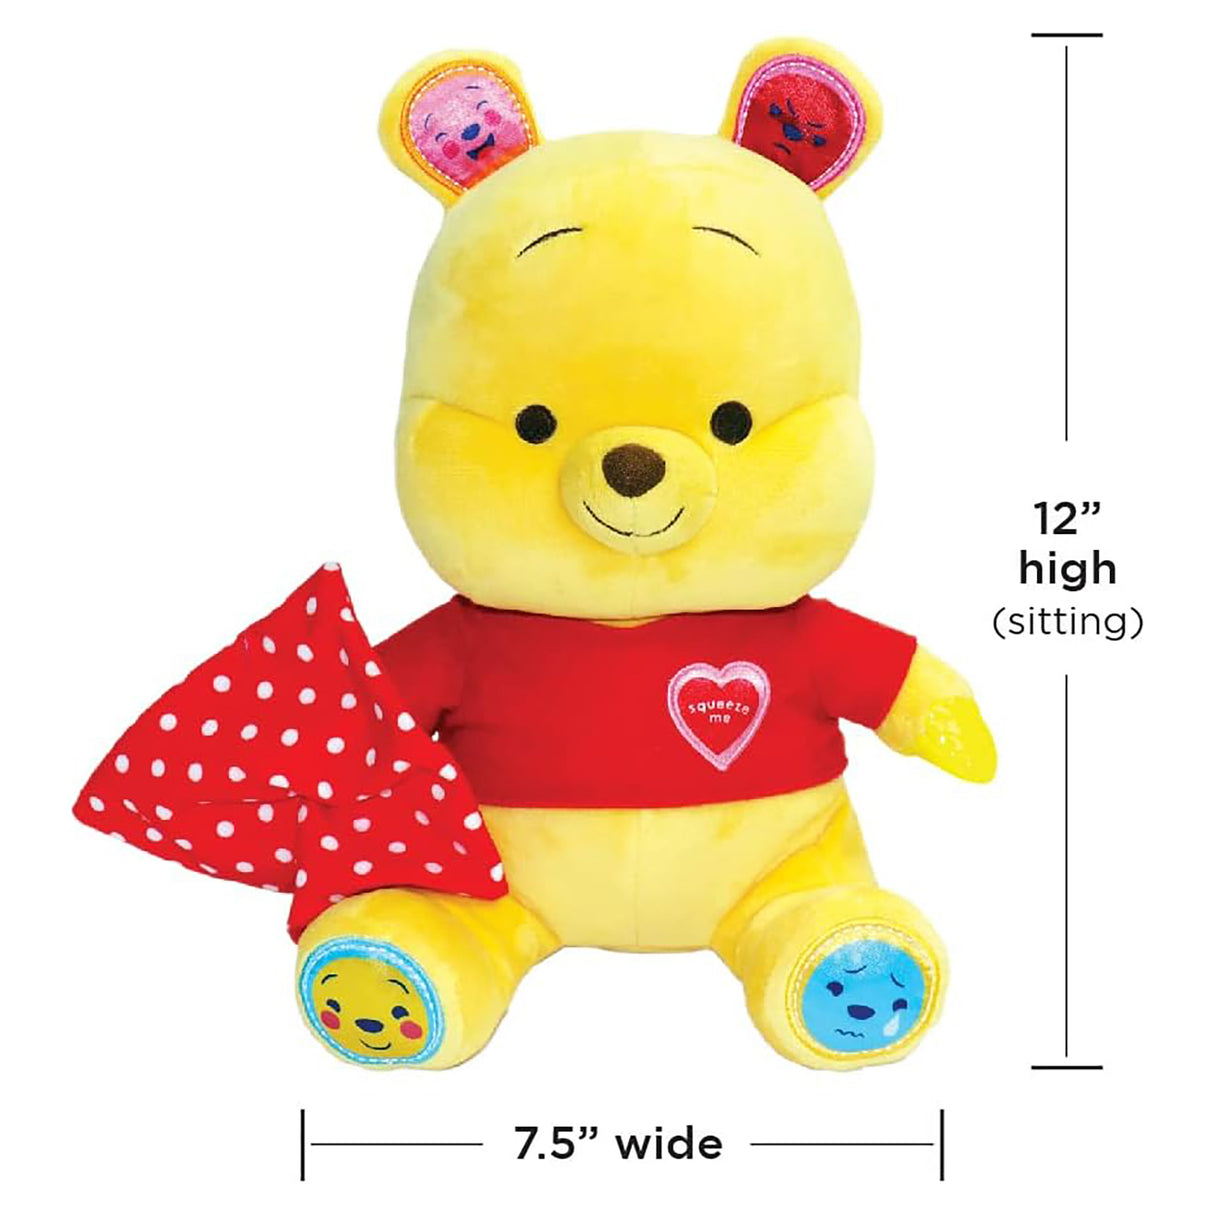 Disney Hooyay Real Feels Winnie the Pooh Interactive Plush